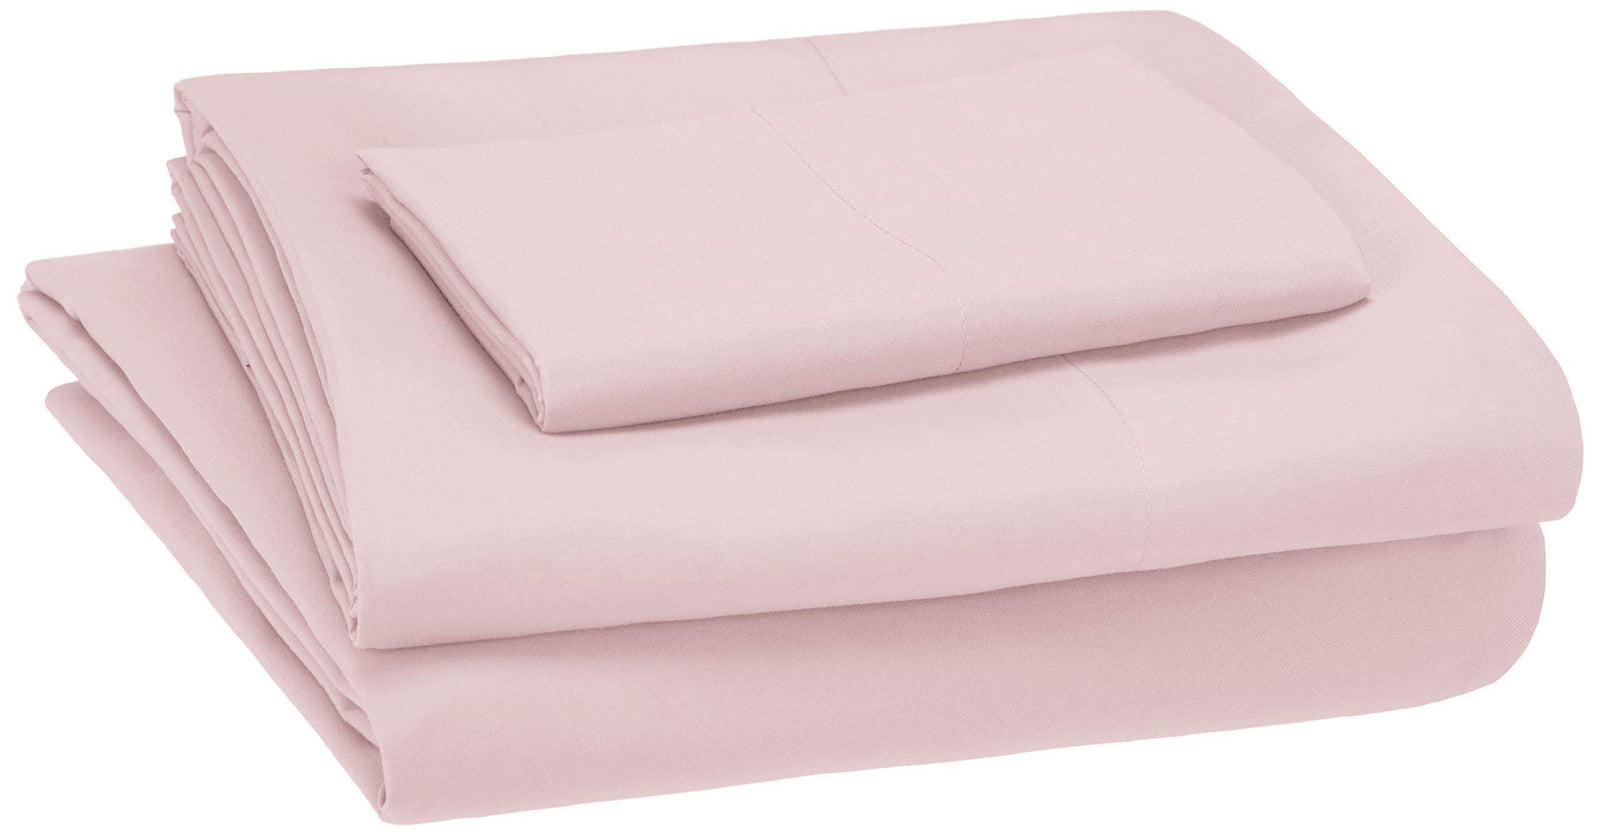 Amazon Basics Kid's Sheet Set - Soft, Easy-Wash Lightweight Microfiber - Twin, Light Pink